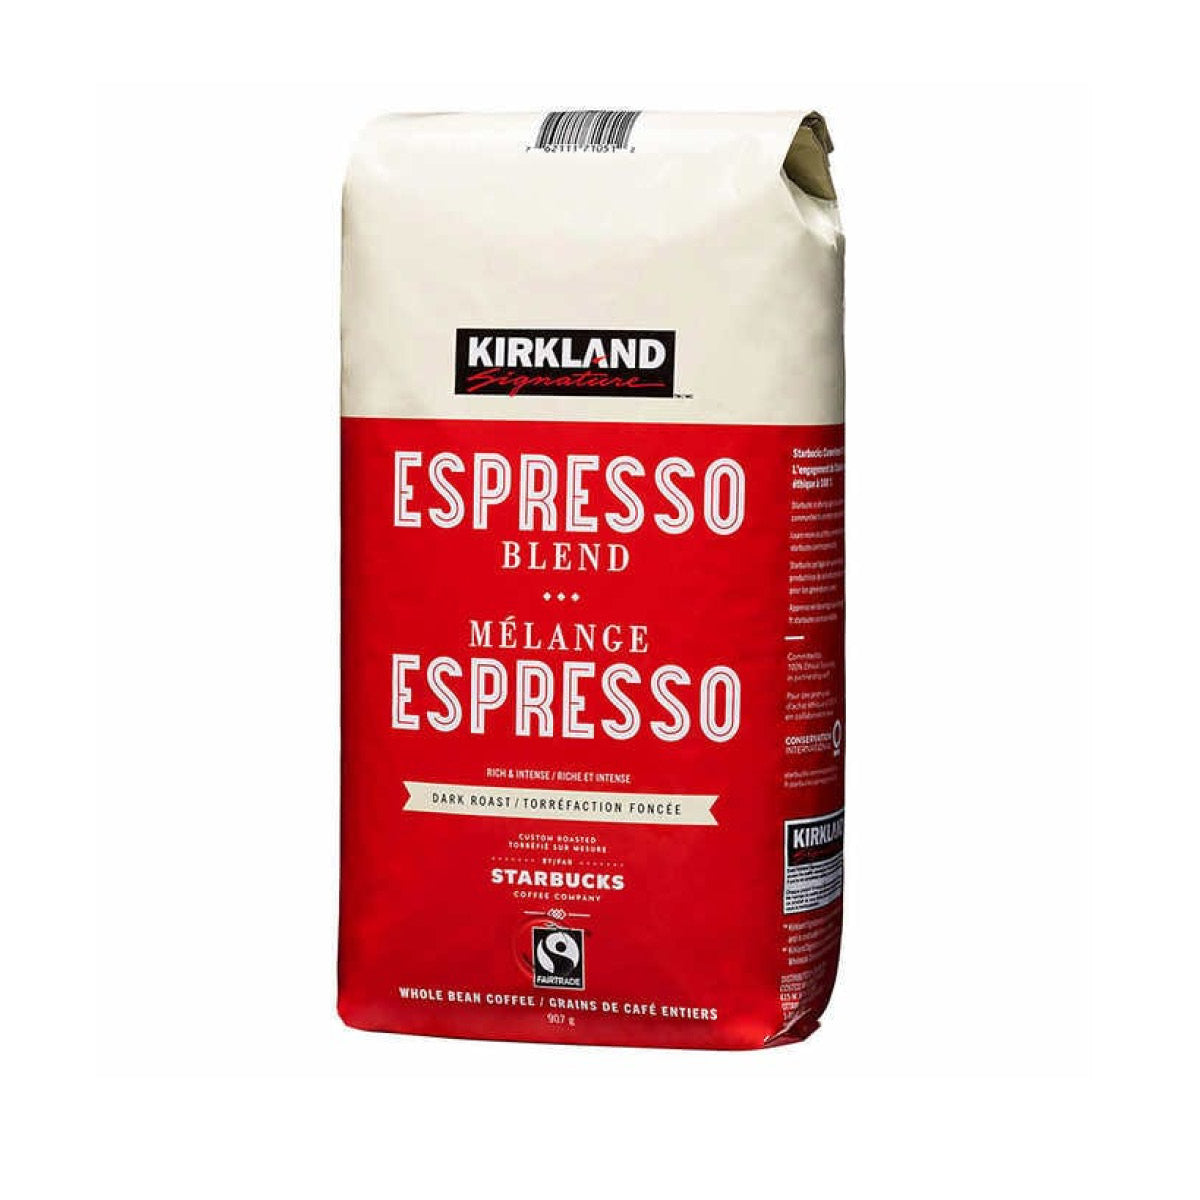 Kirkland Espresso Blend, Whole Bean Coffee, 1.13kg